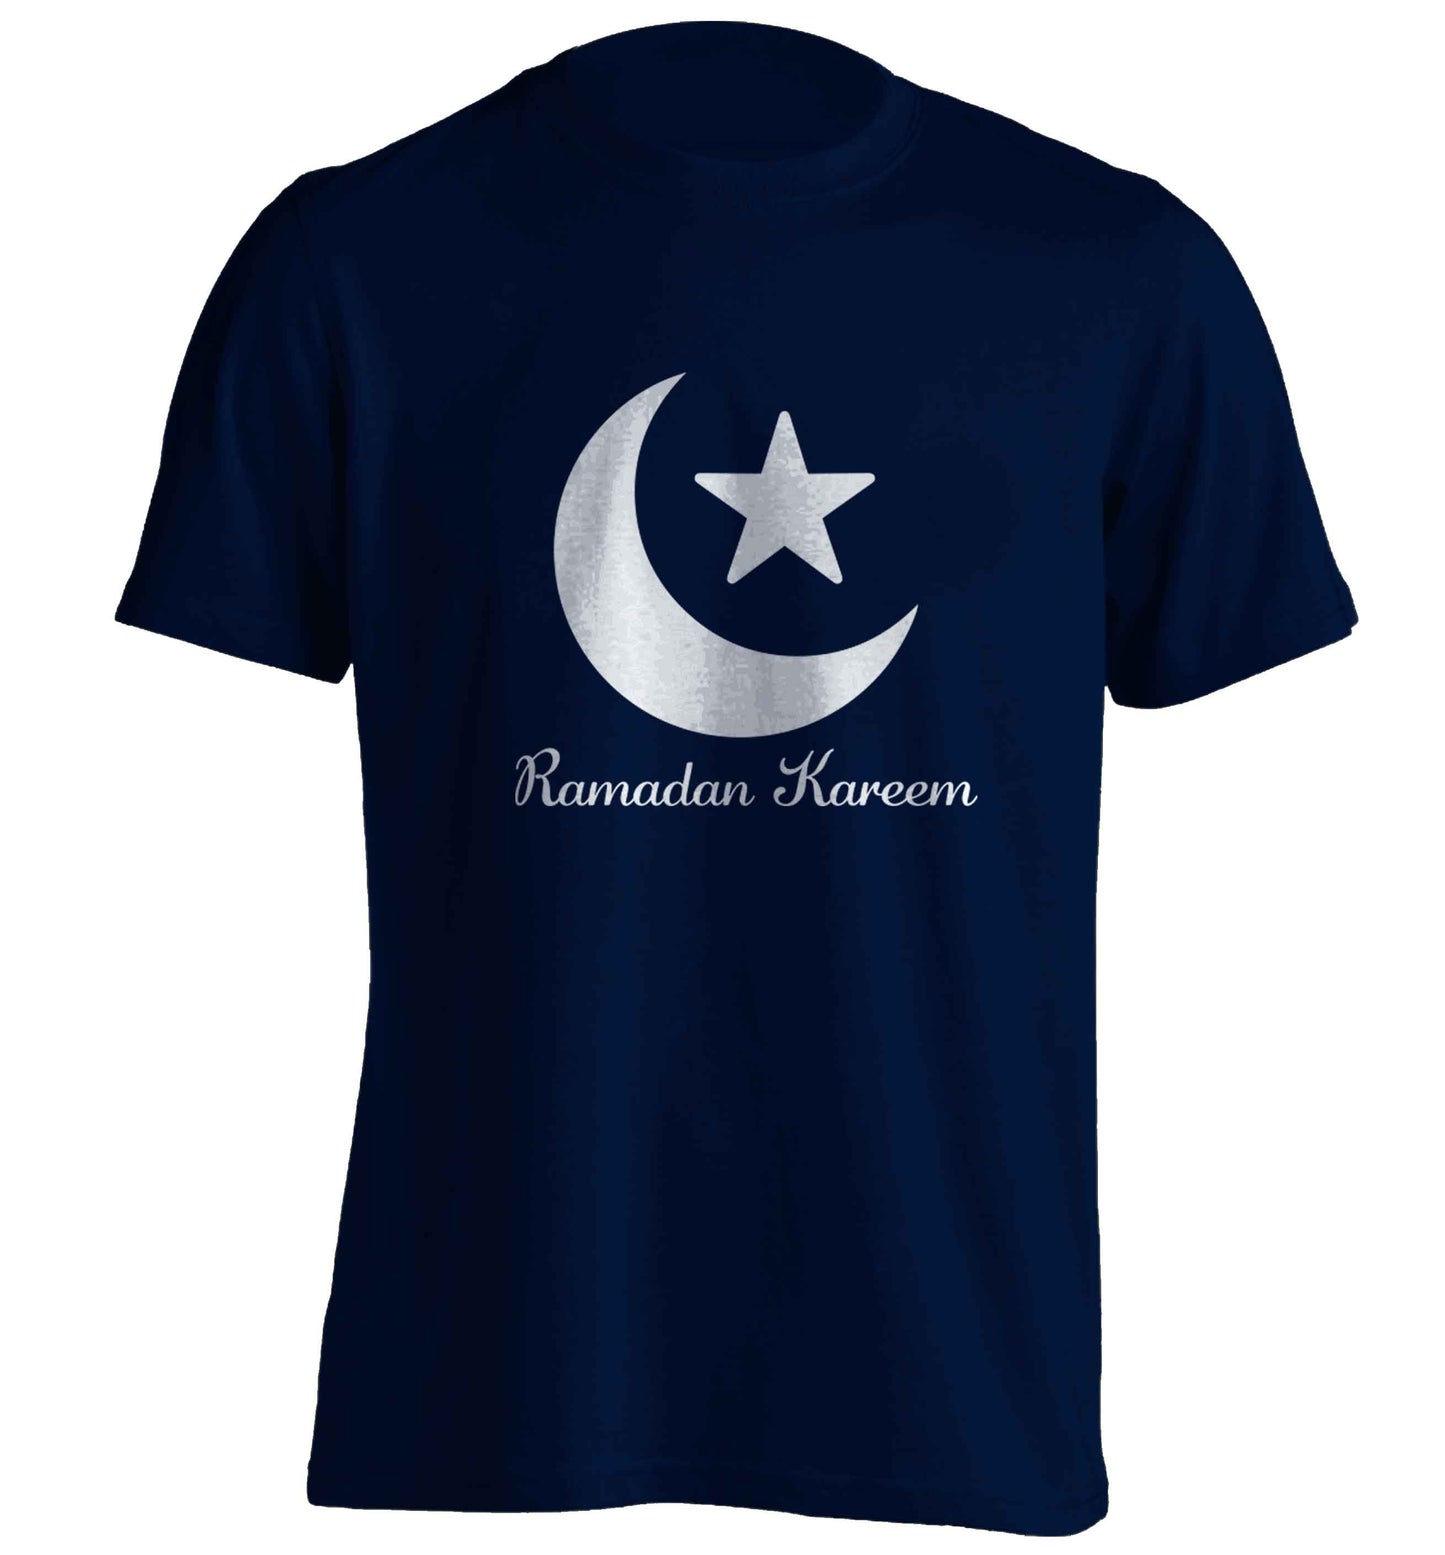 Ramadan kareem adults unisex navy Tshirt 2XL